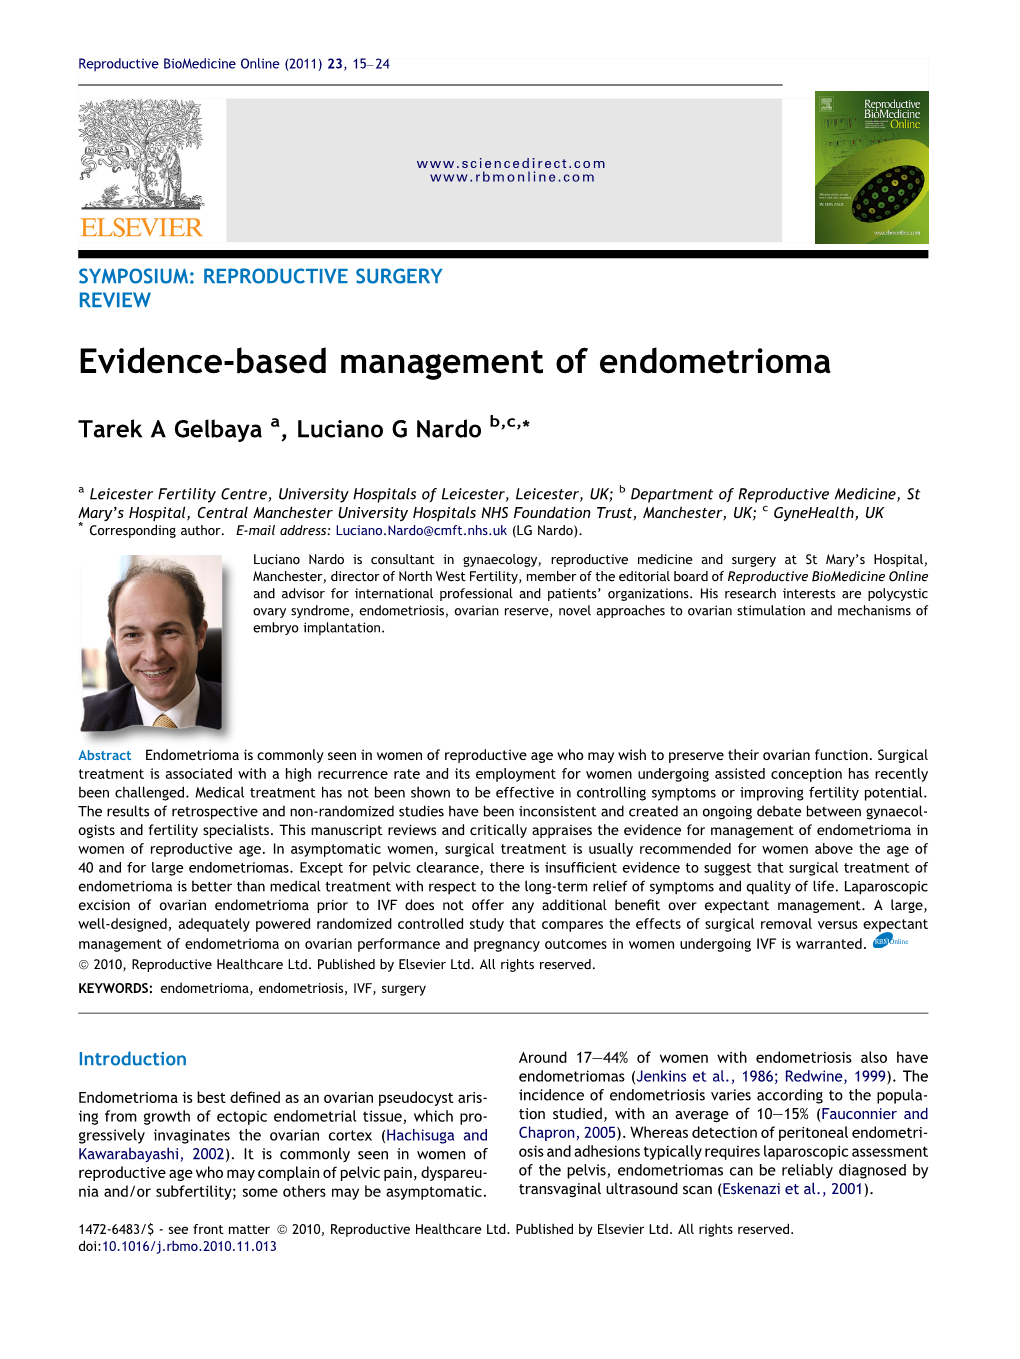 Evidence-Based Management of Endometrioma